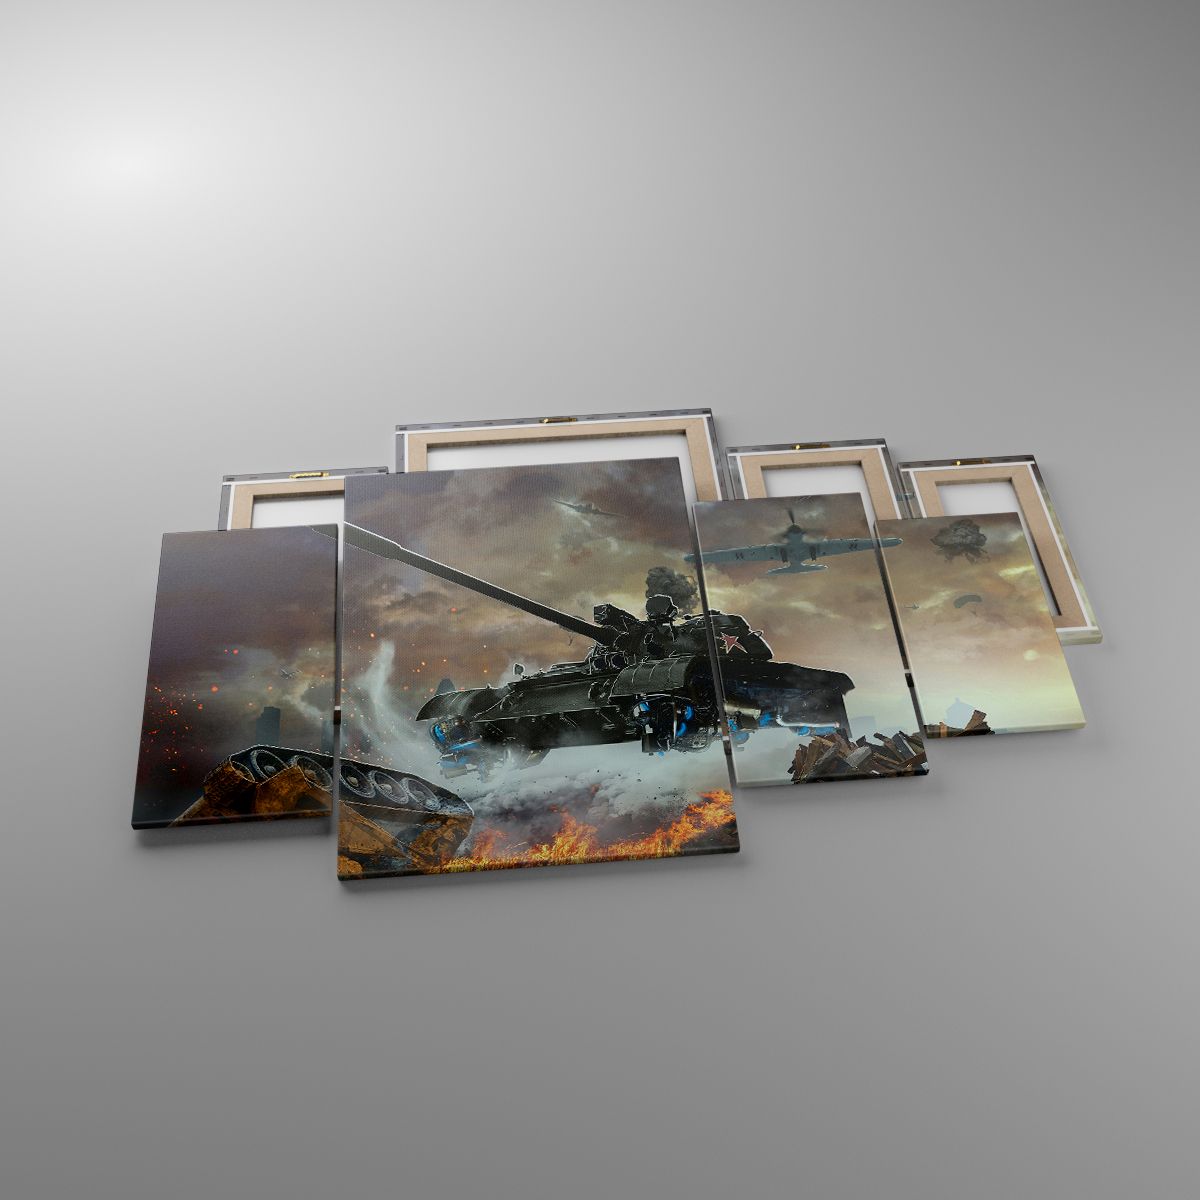 Obrazy Militaria, Obrazy Wojna, Obrazy Czołg, Obrazy Samolot Wojskowy, Obrazy Bitwa